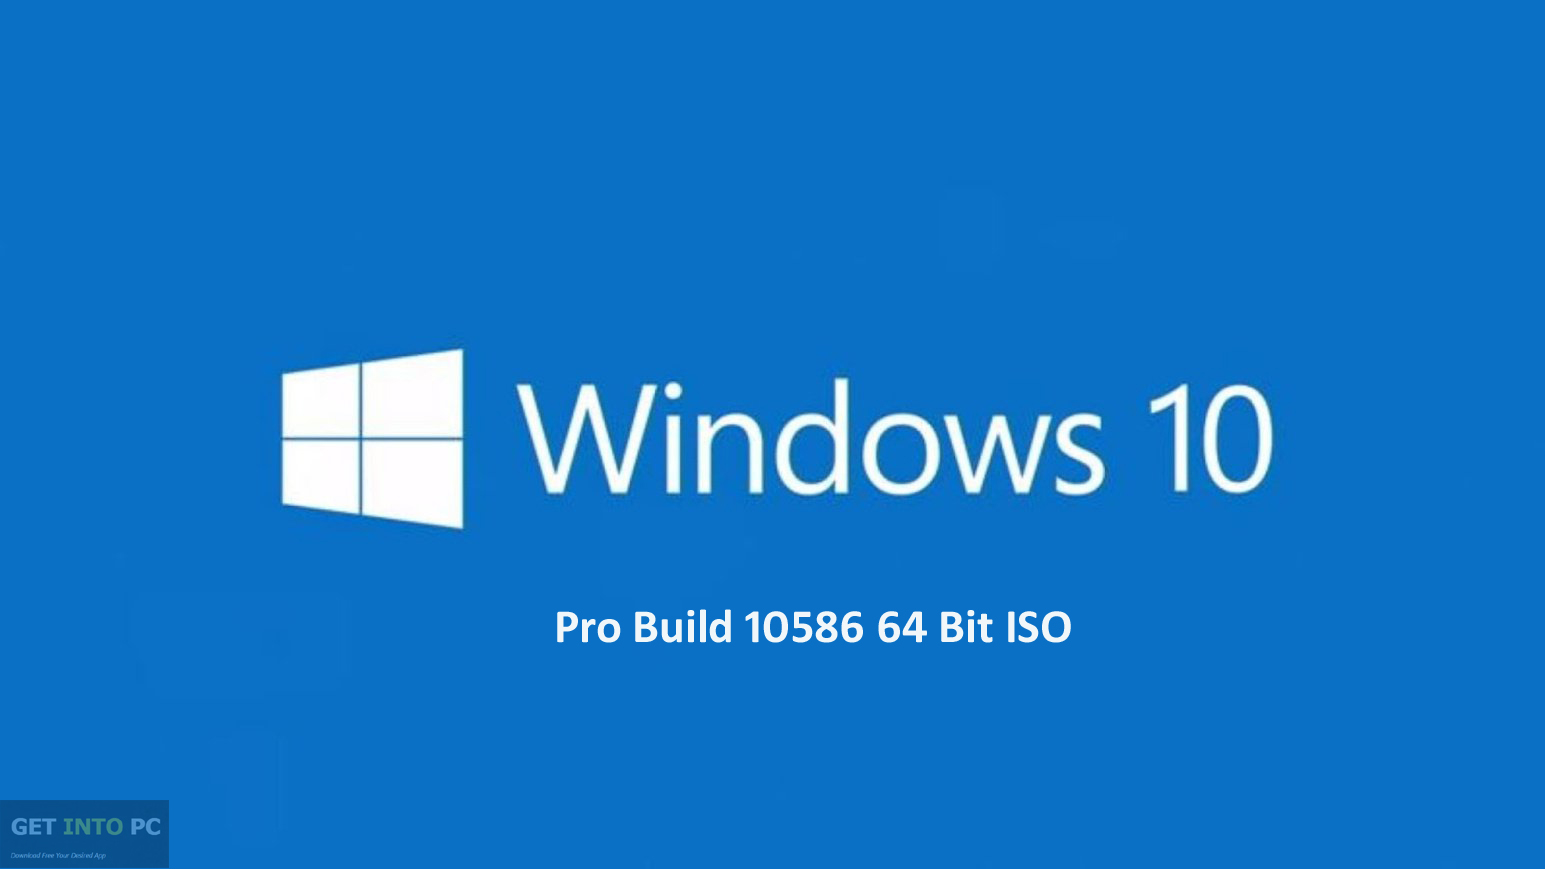 Windows 10 Pro Build 10586 64 Bit ISO Free Download